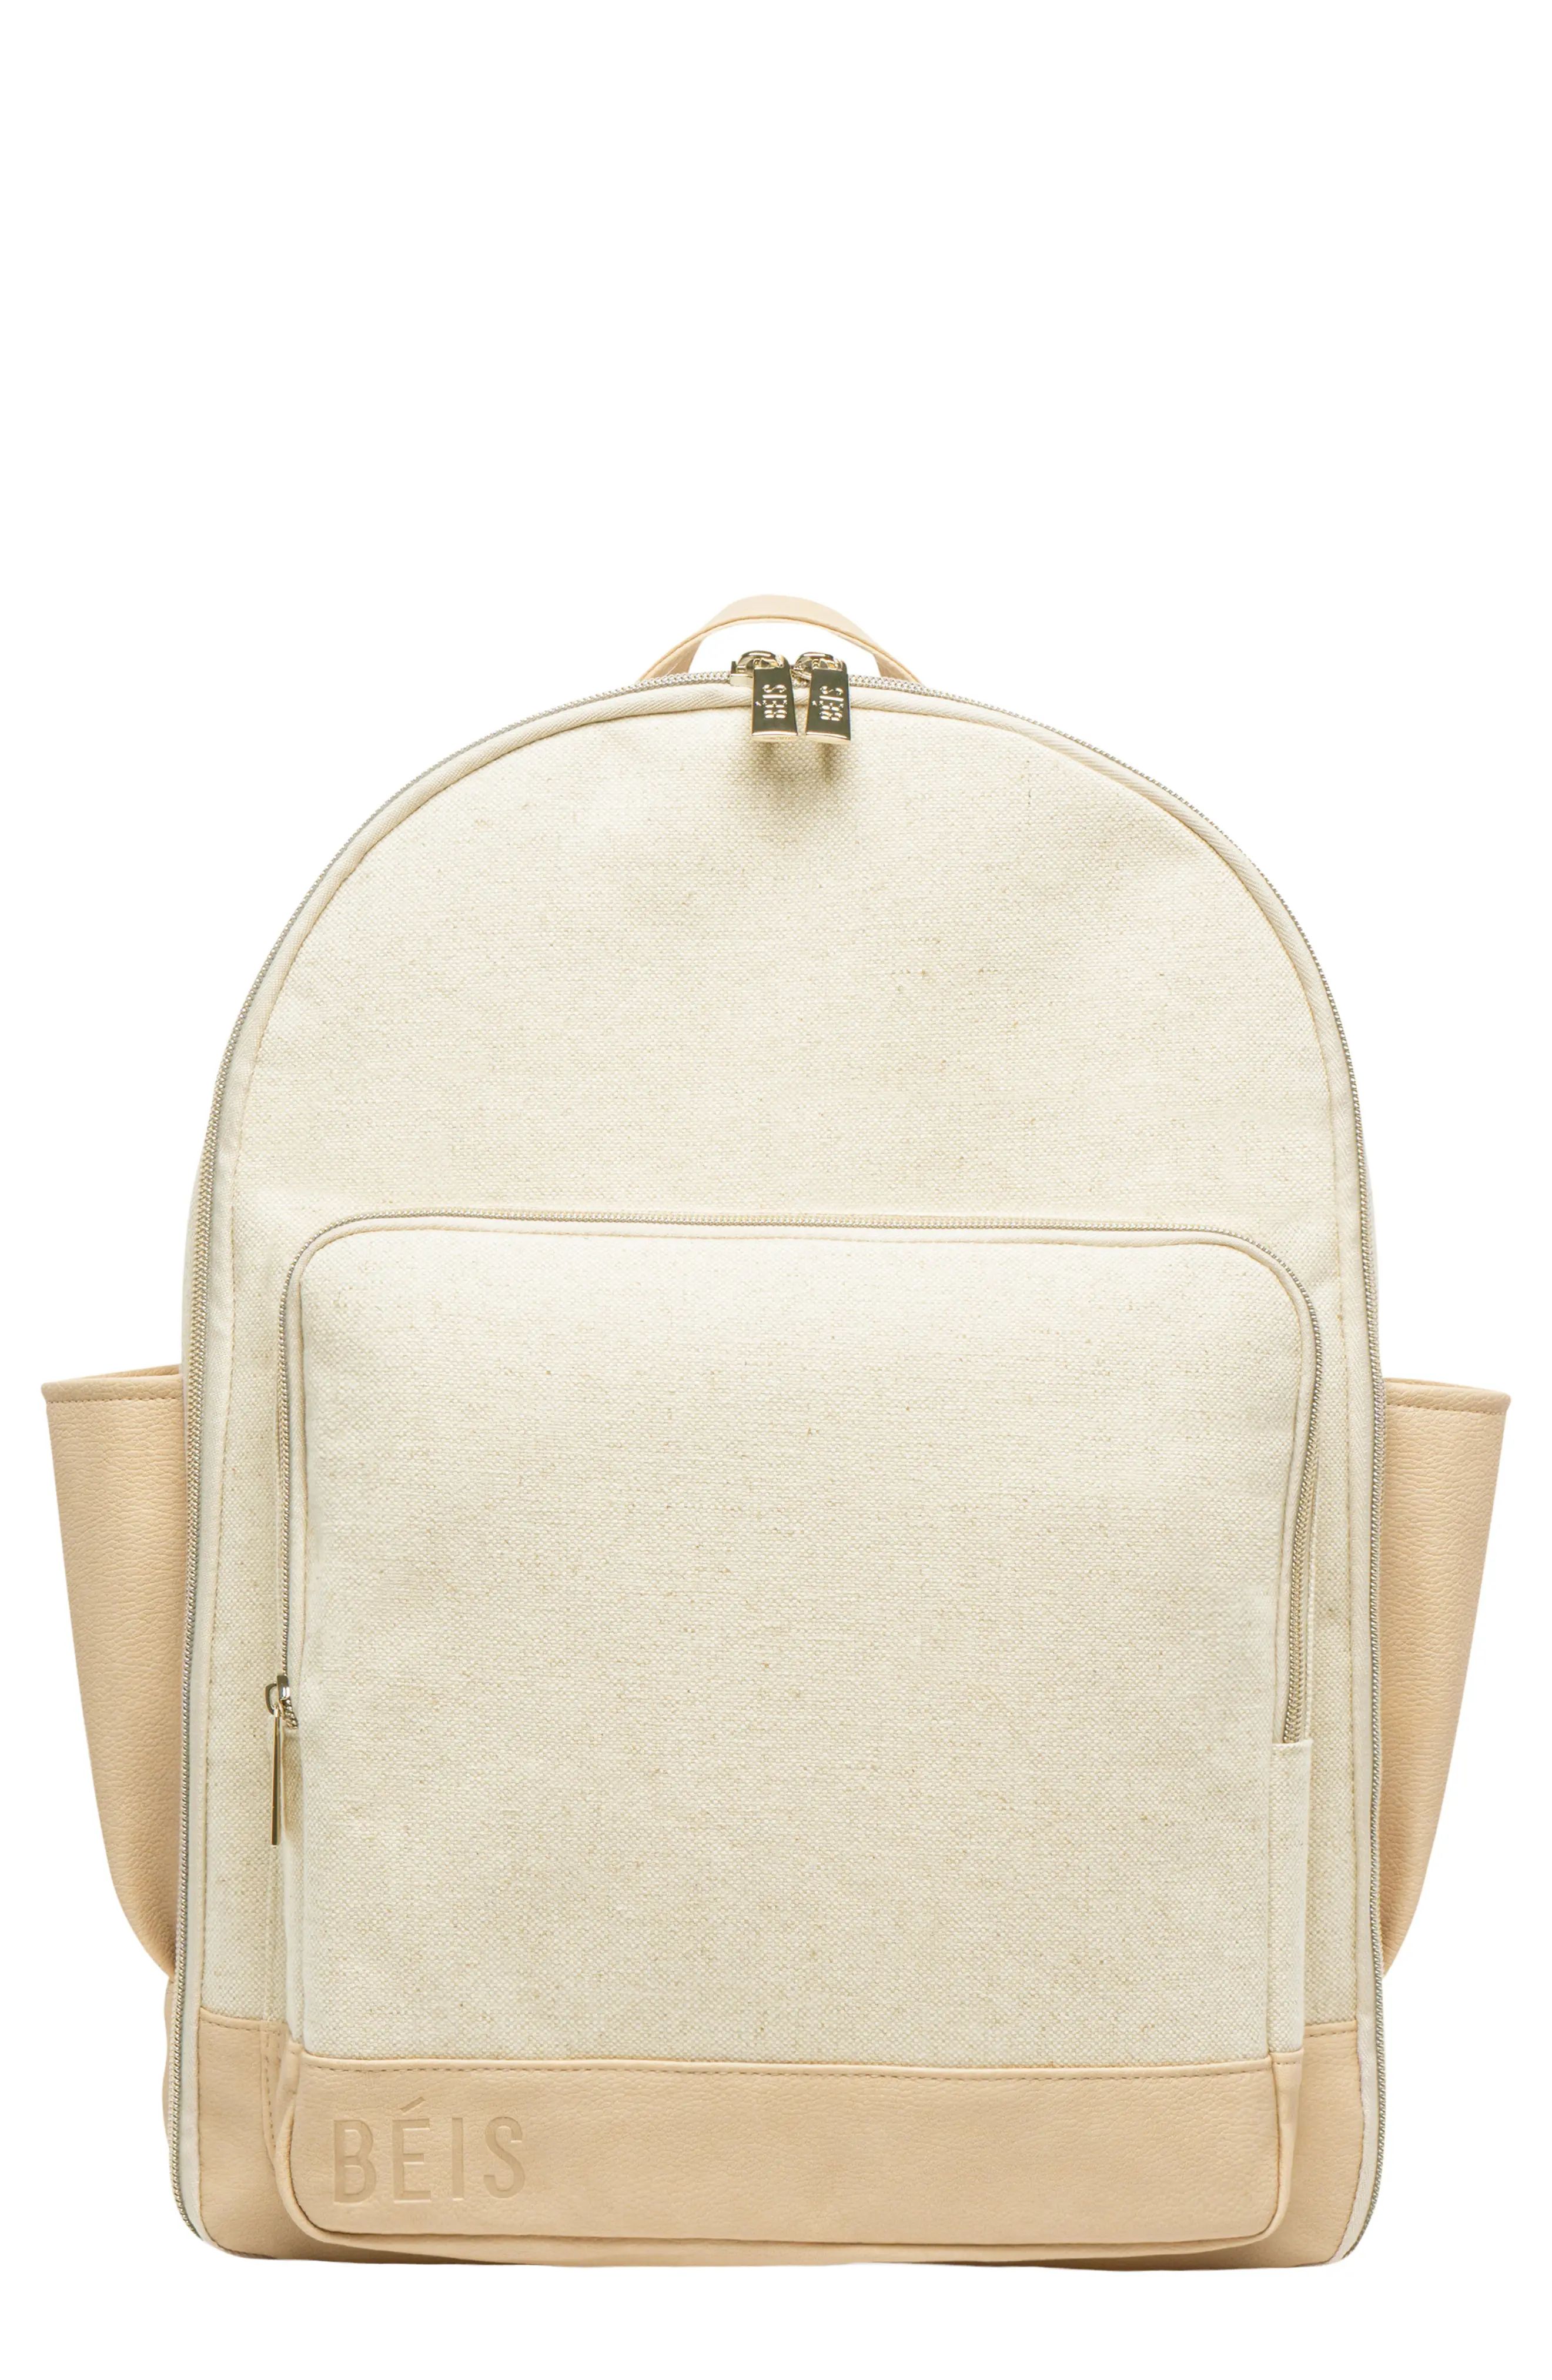 Beis Travel Multi Function Travel Backpack - | Nordstrom